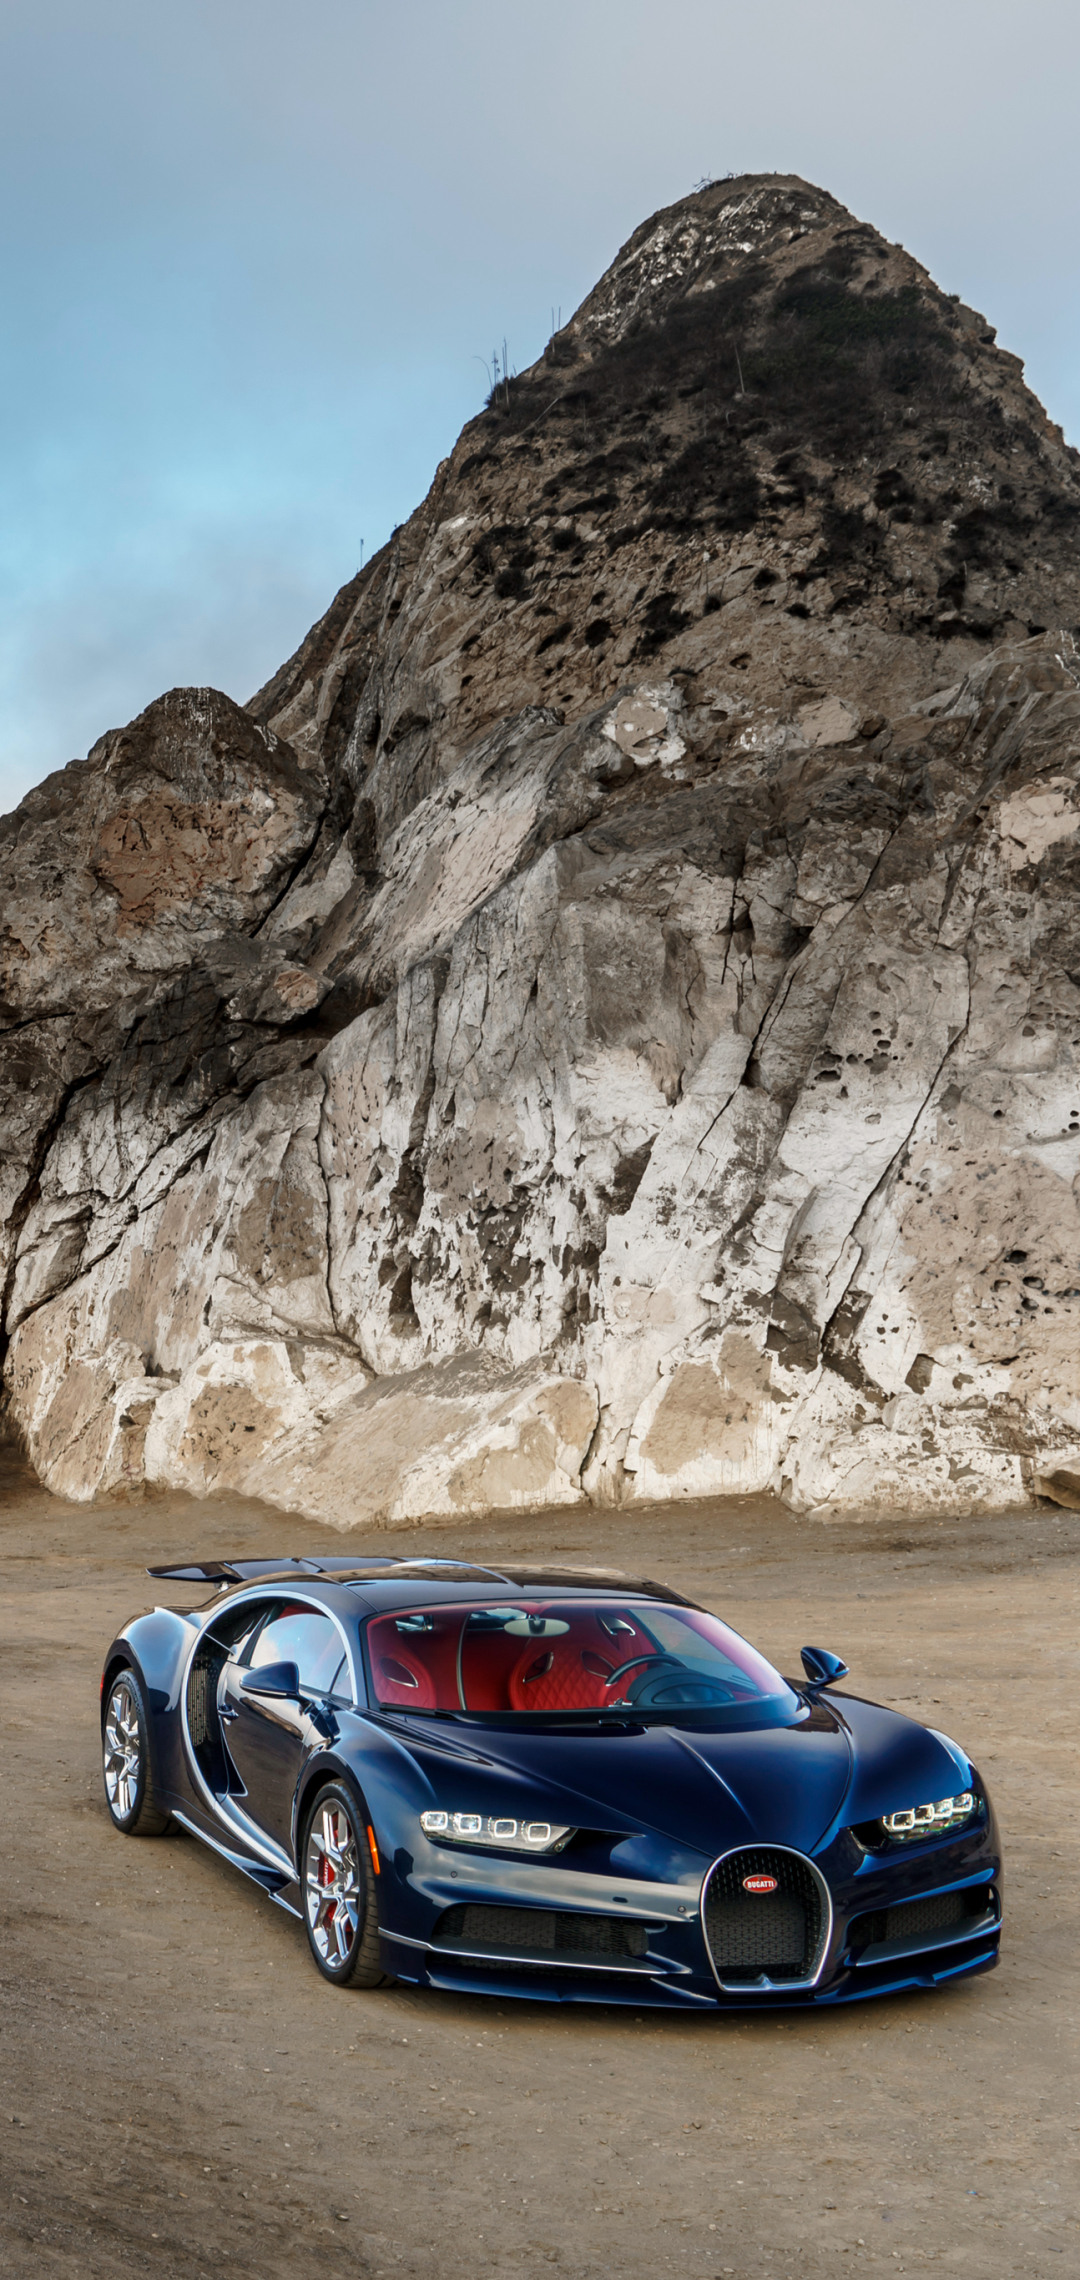 Baixar papel de parede para celular de Bugatti, Carro, Super Carro, Veículo, Bugatti Chiron, Veículos gratuito.